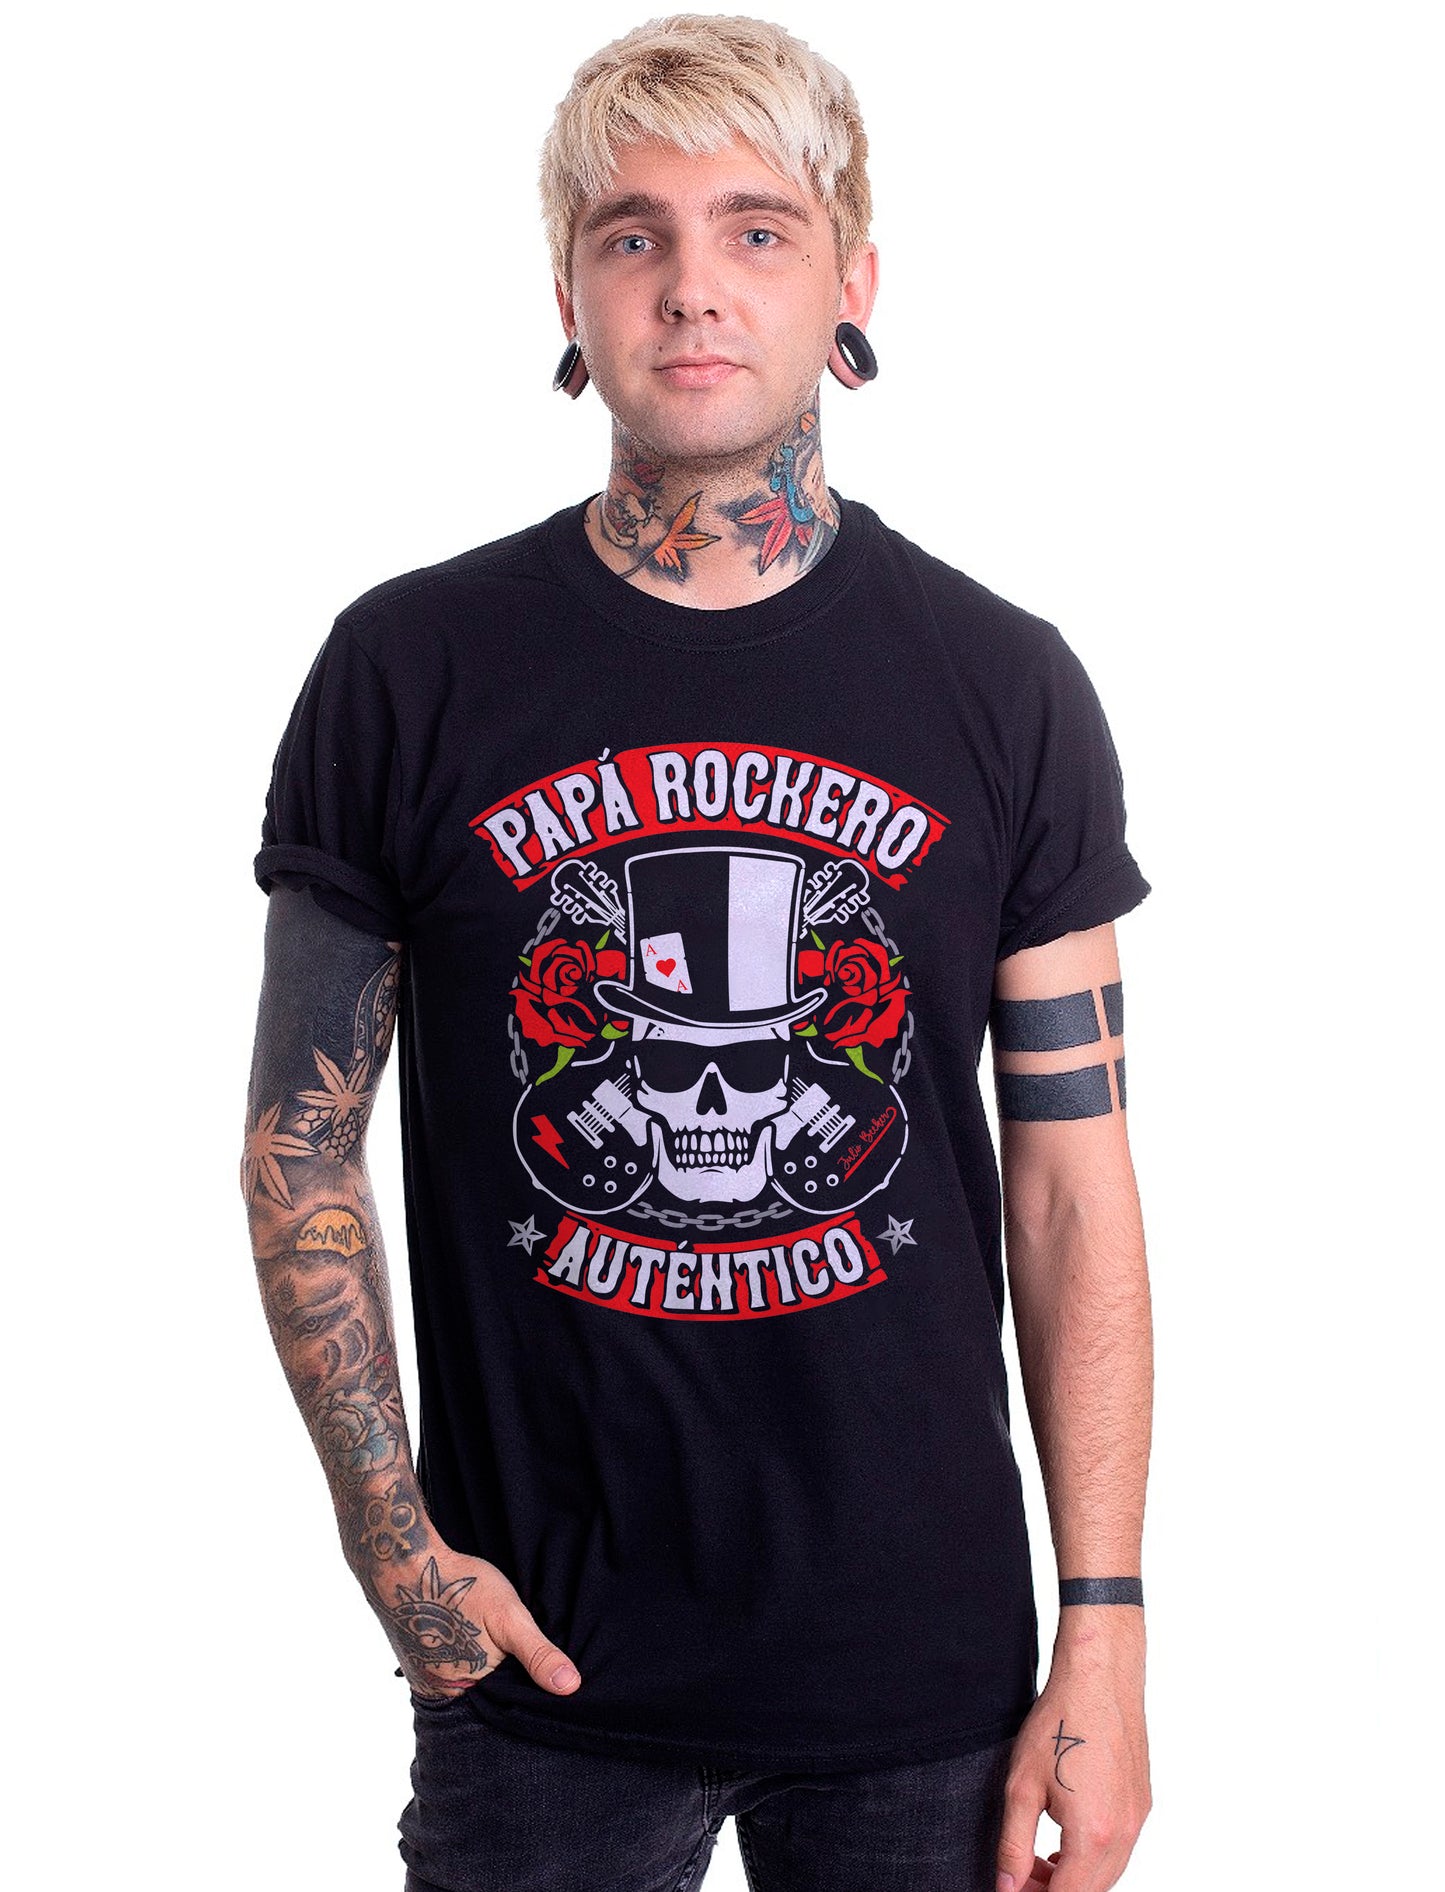 Camiseta personalizada Papá rockero